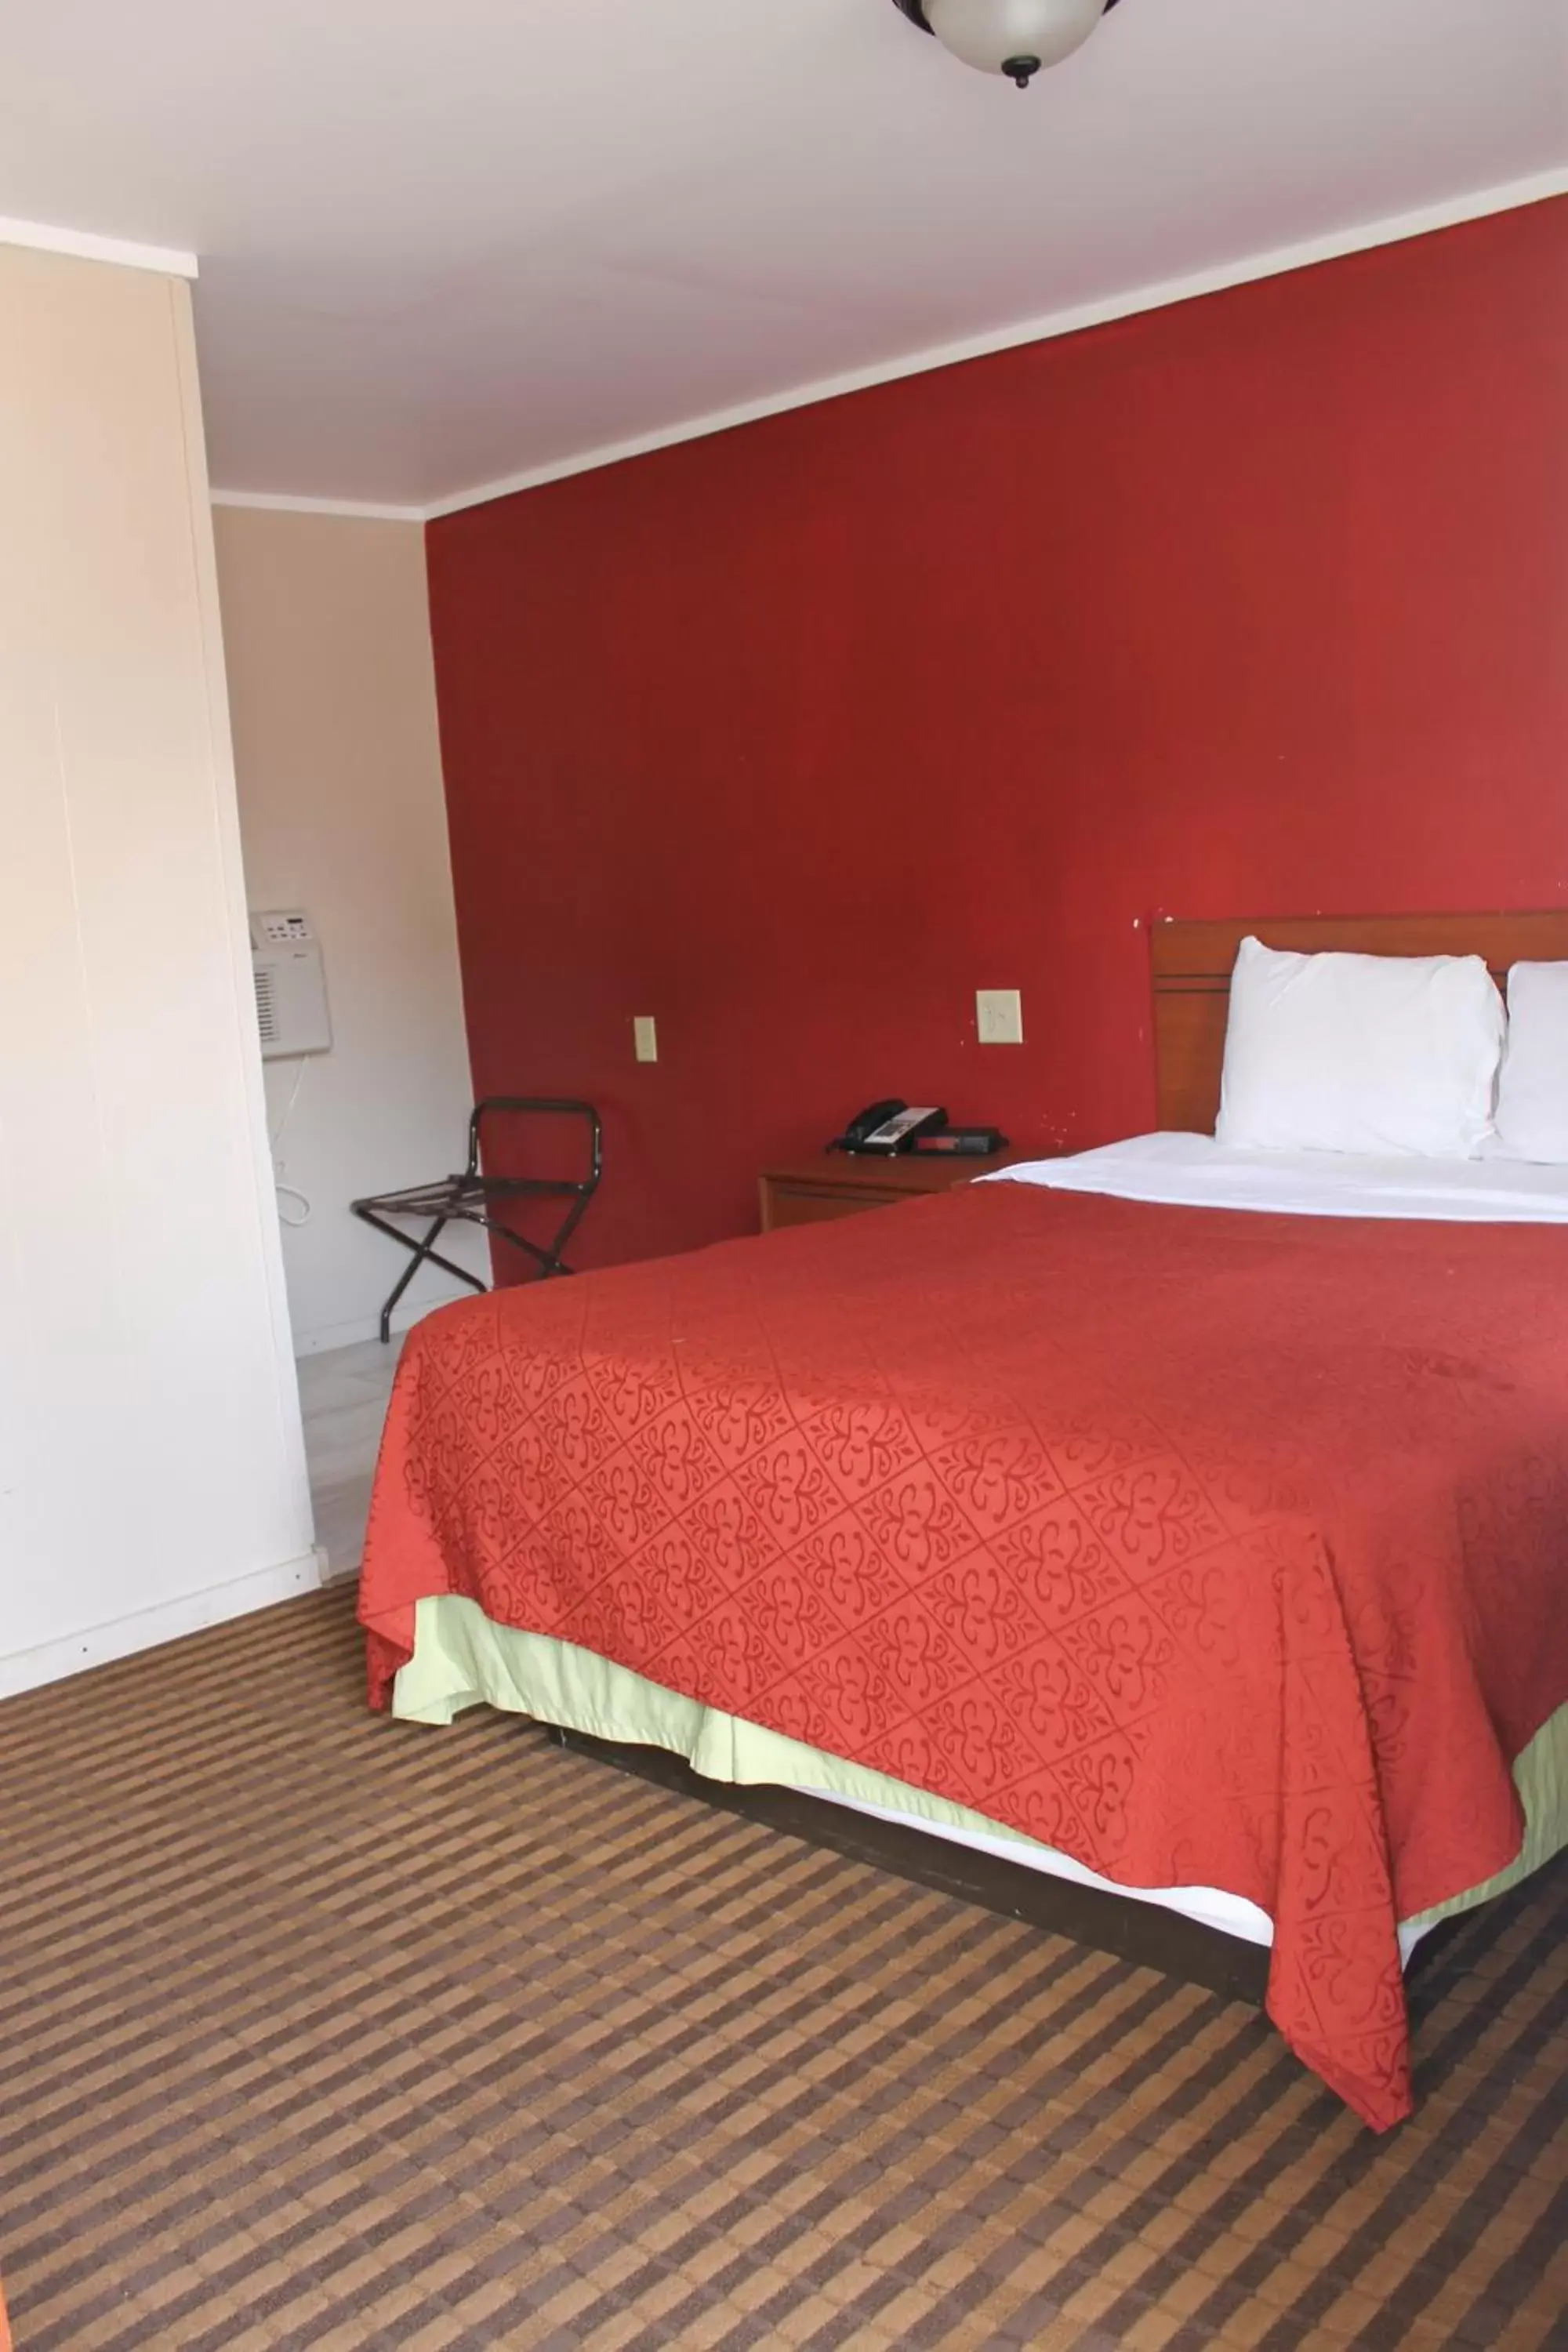 Bed, Room Photo in Motel Reedsburg